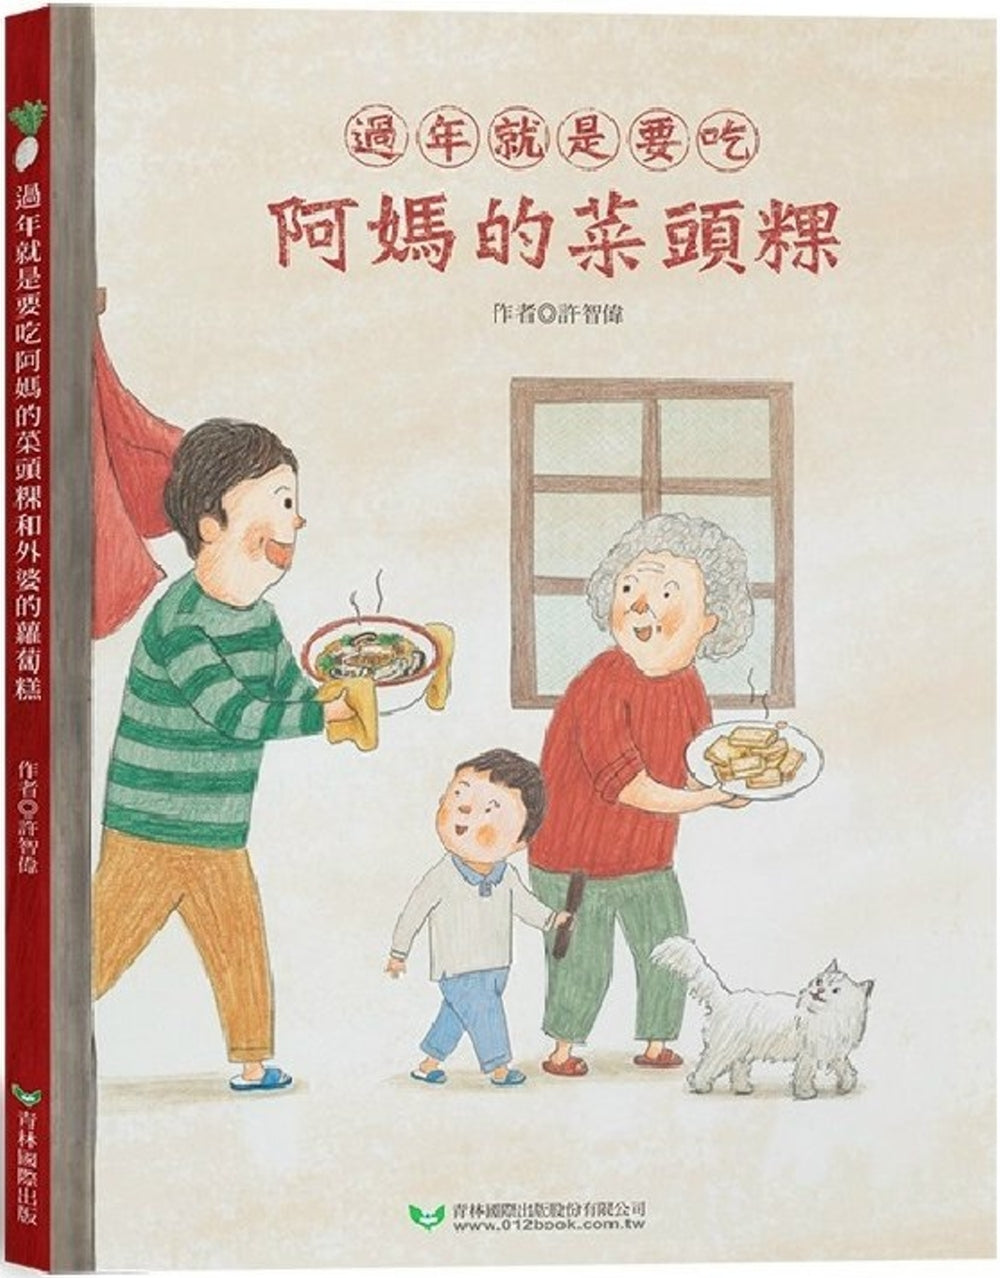 Mama's Radish Cake & Grandma's Turnip Cake (A Dual Direction Lunar New Year Book) • 過年就是要吃阿媽的菜頭粿和外婆的蘿蔔糕 (雙封面雙故事)